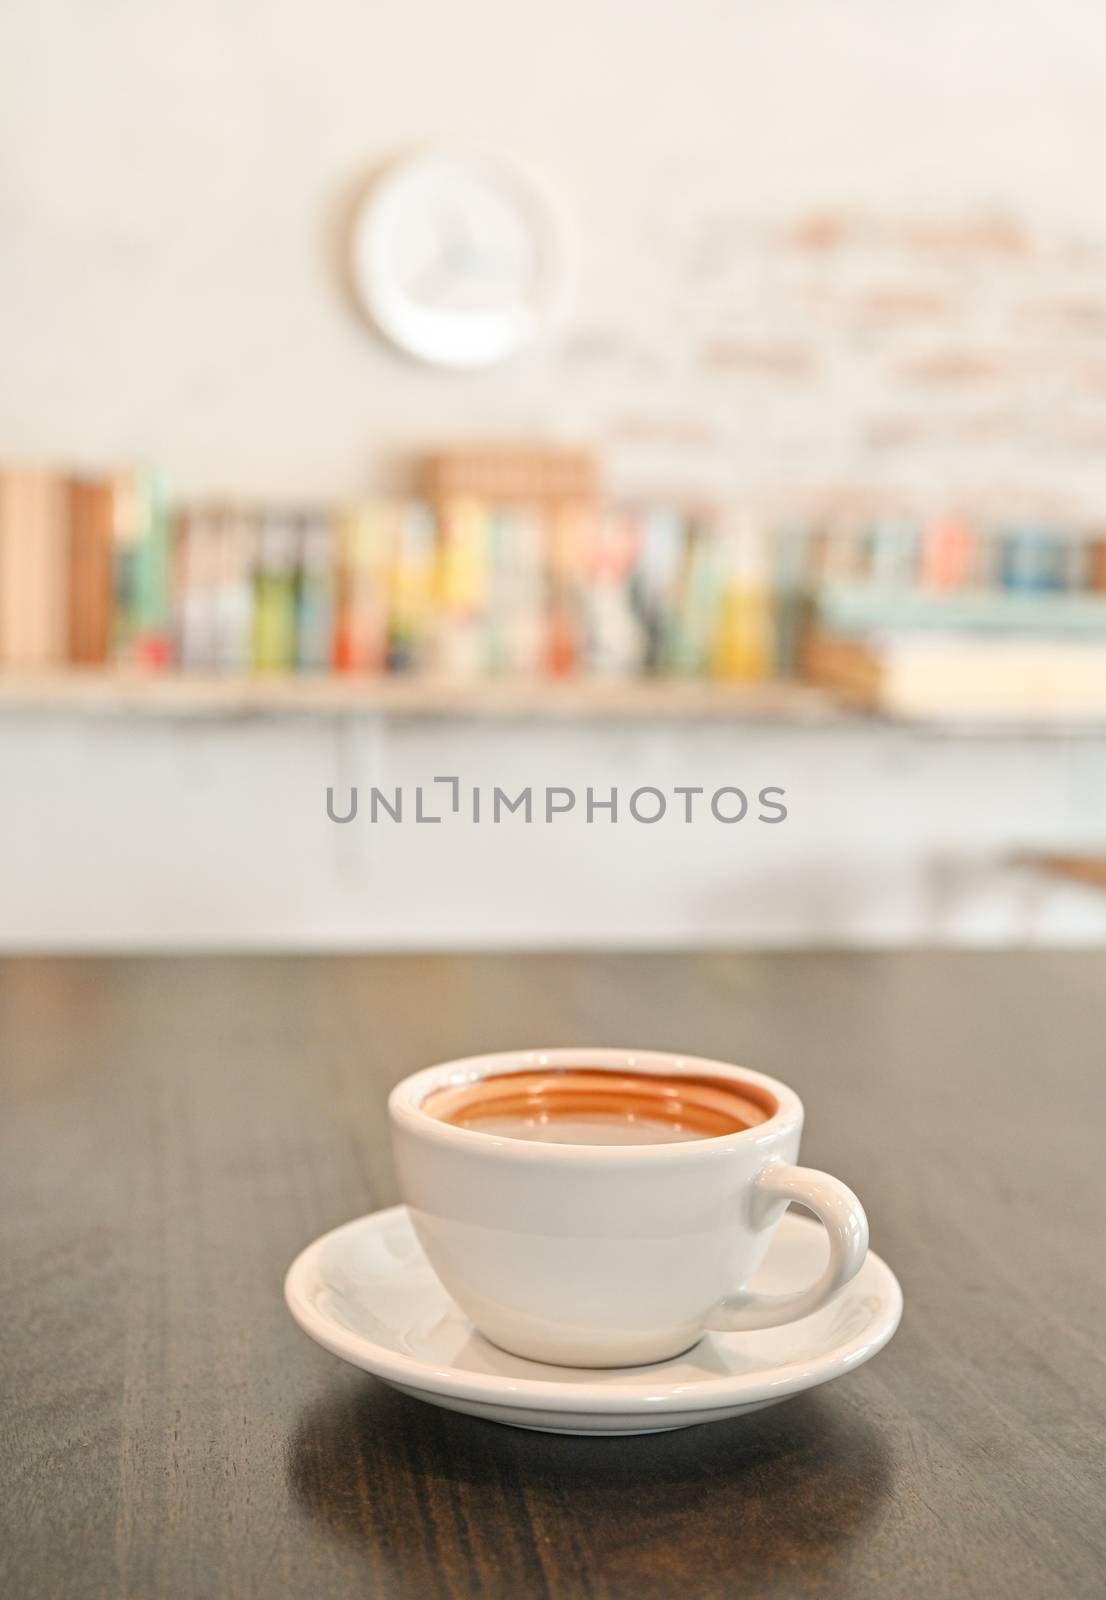 White coffee mug on wooden table, background, bookshelf. by poungsaed